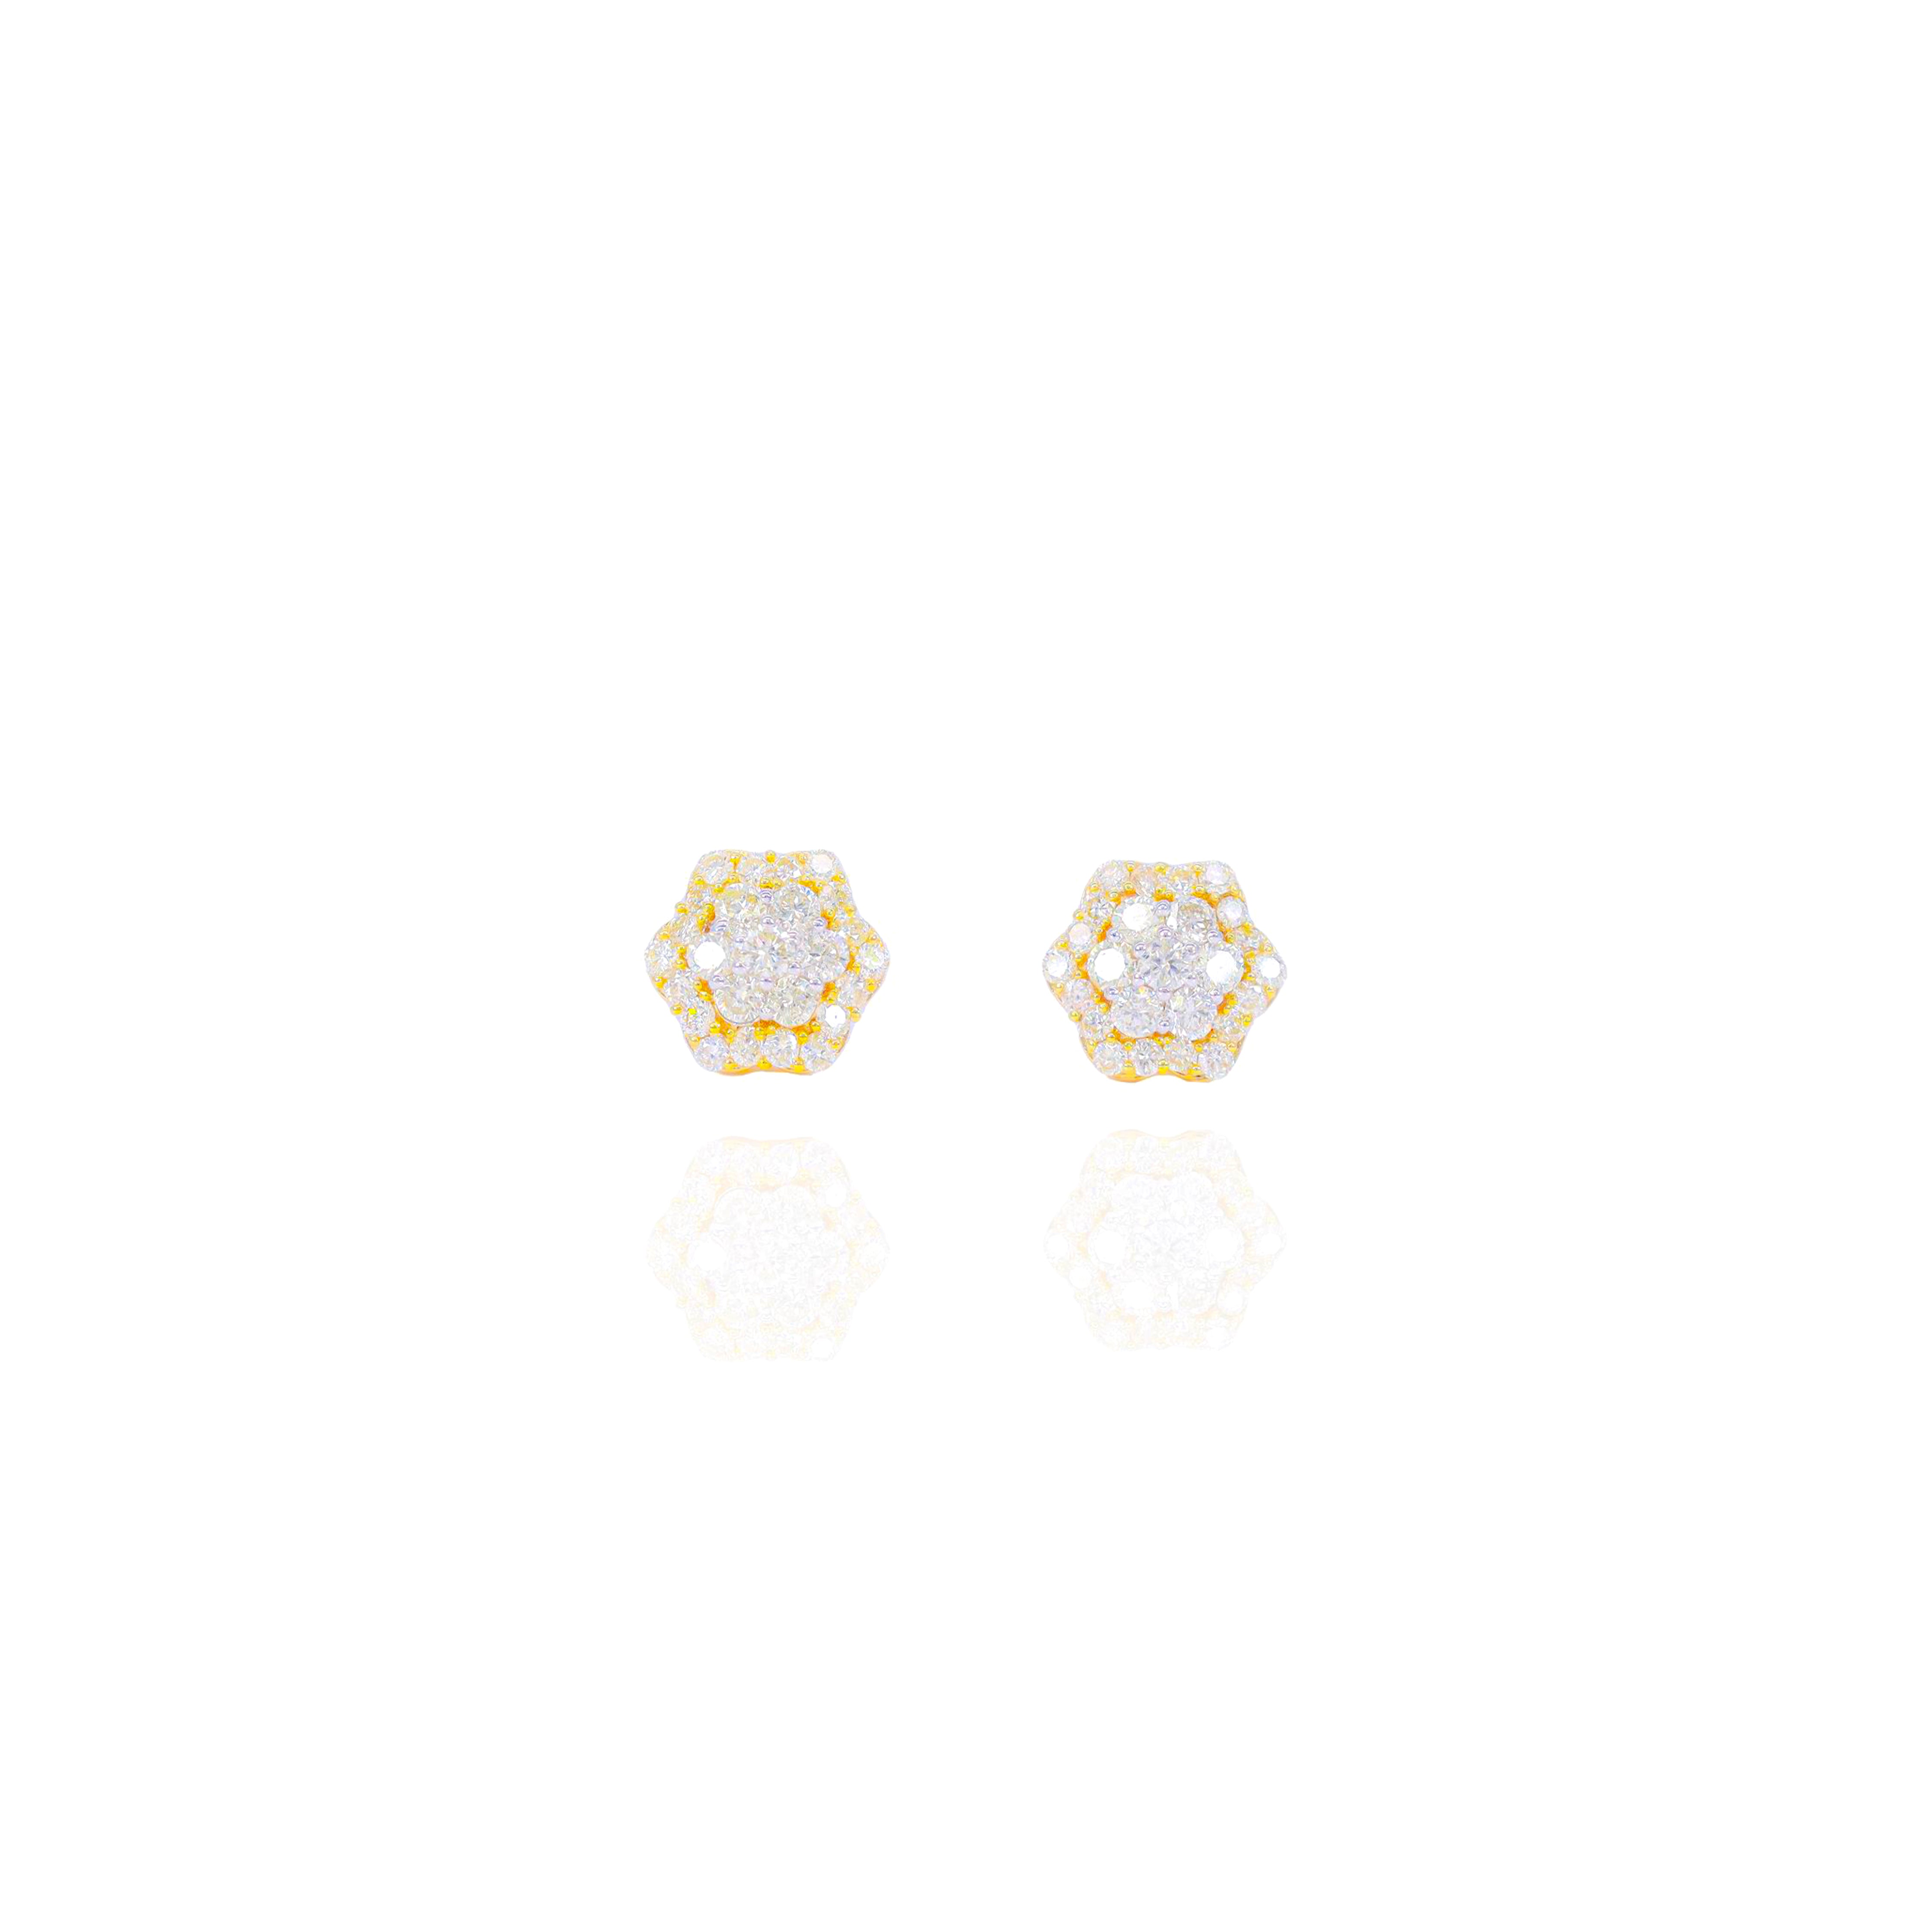 Star Shaped Diamond Cluster Earrings